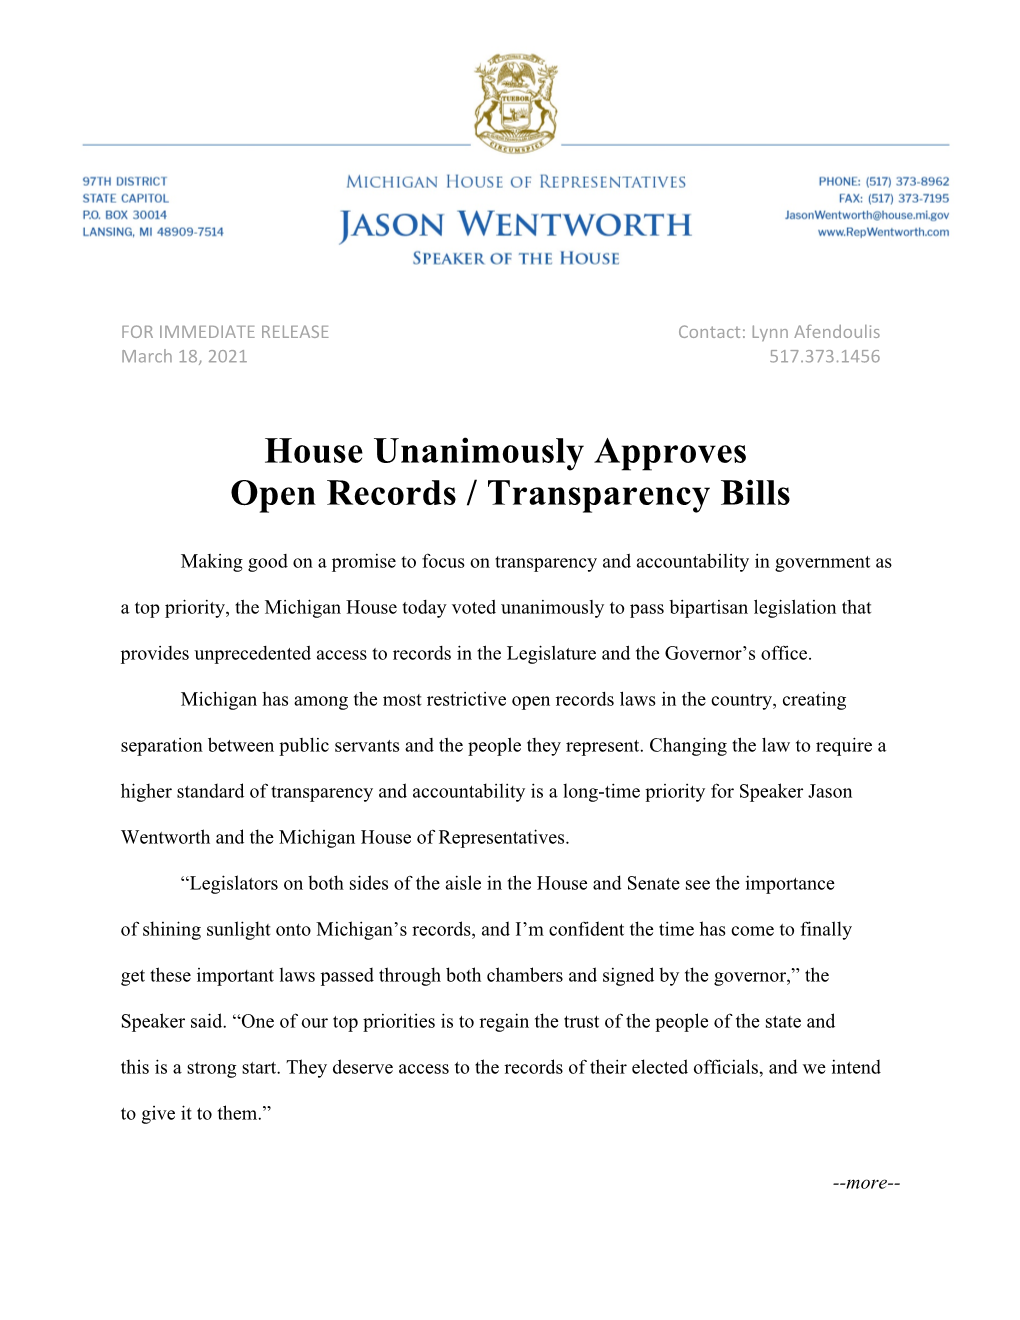 Open Records Legislation